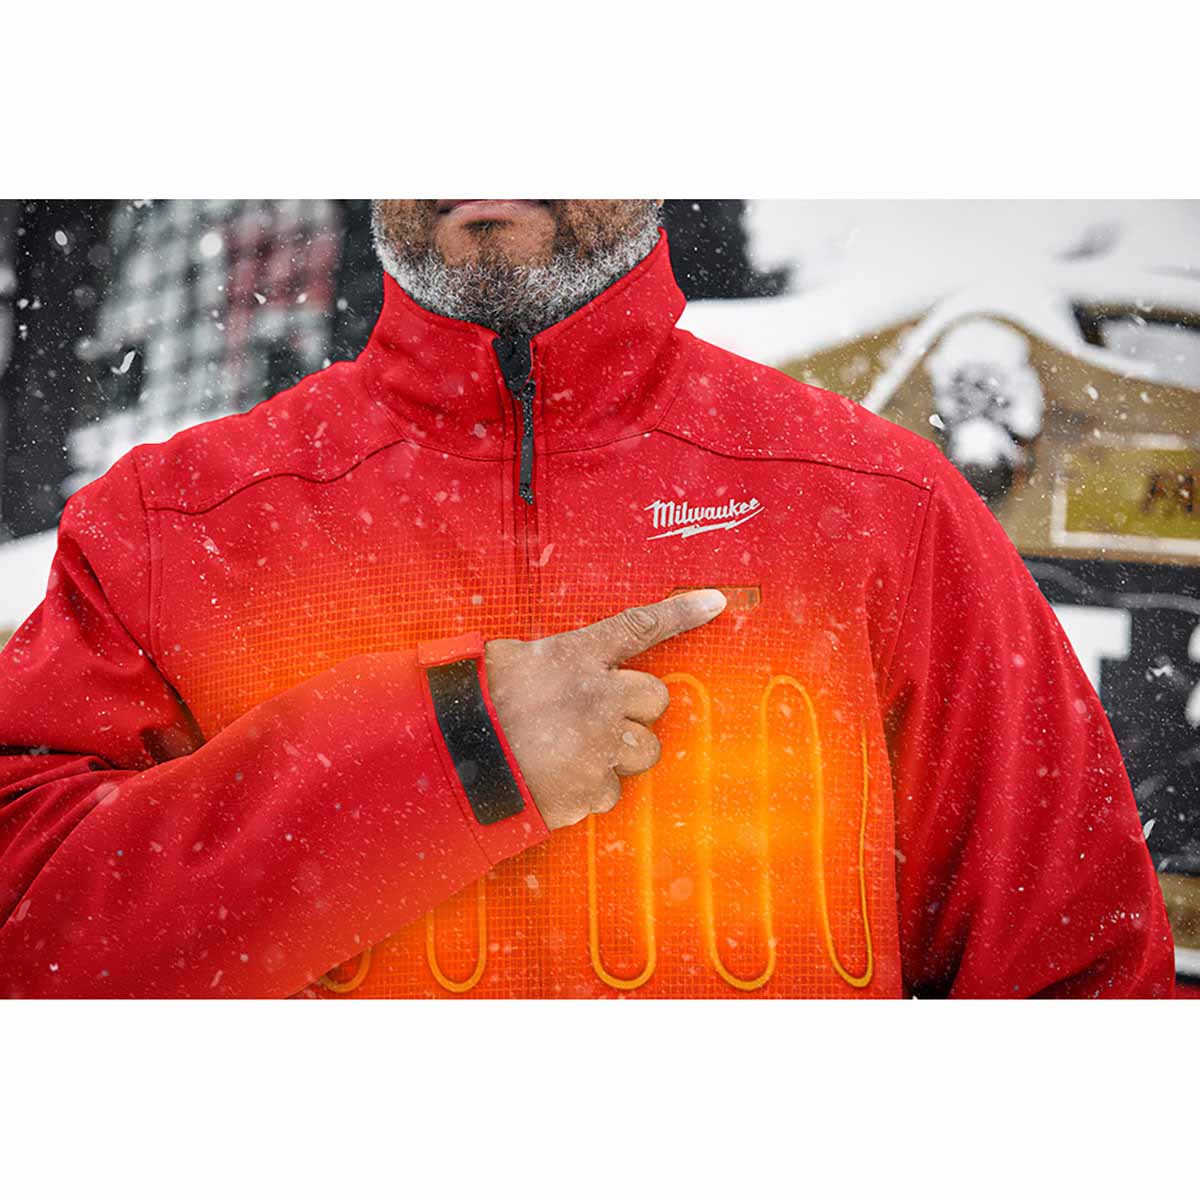 Milwaukee 204R-21 M12 Heated TOUGHSHELL™ Jacket Kit, Red